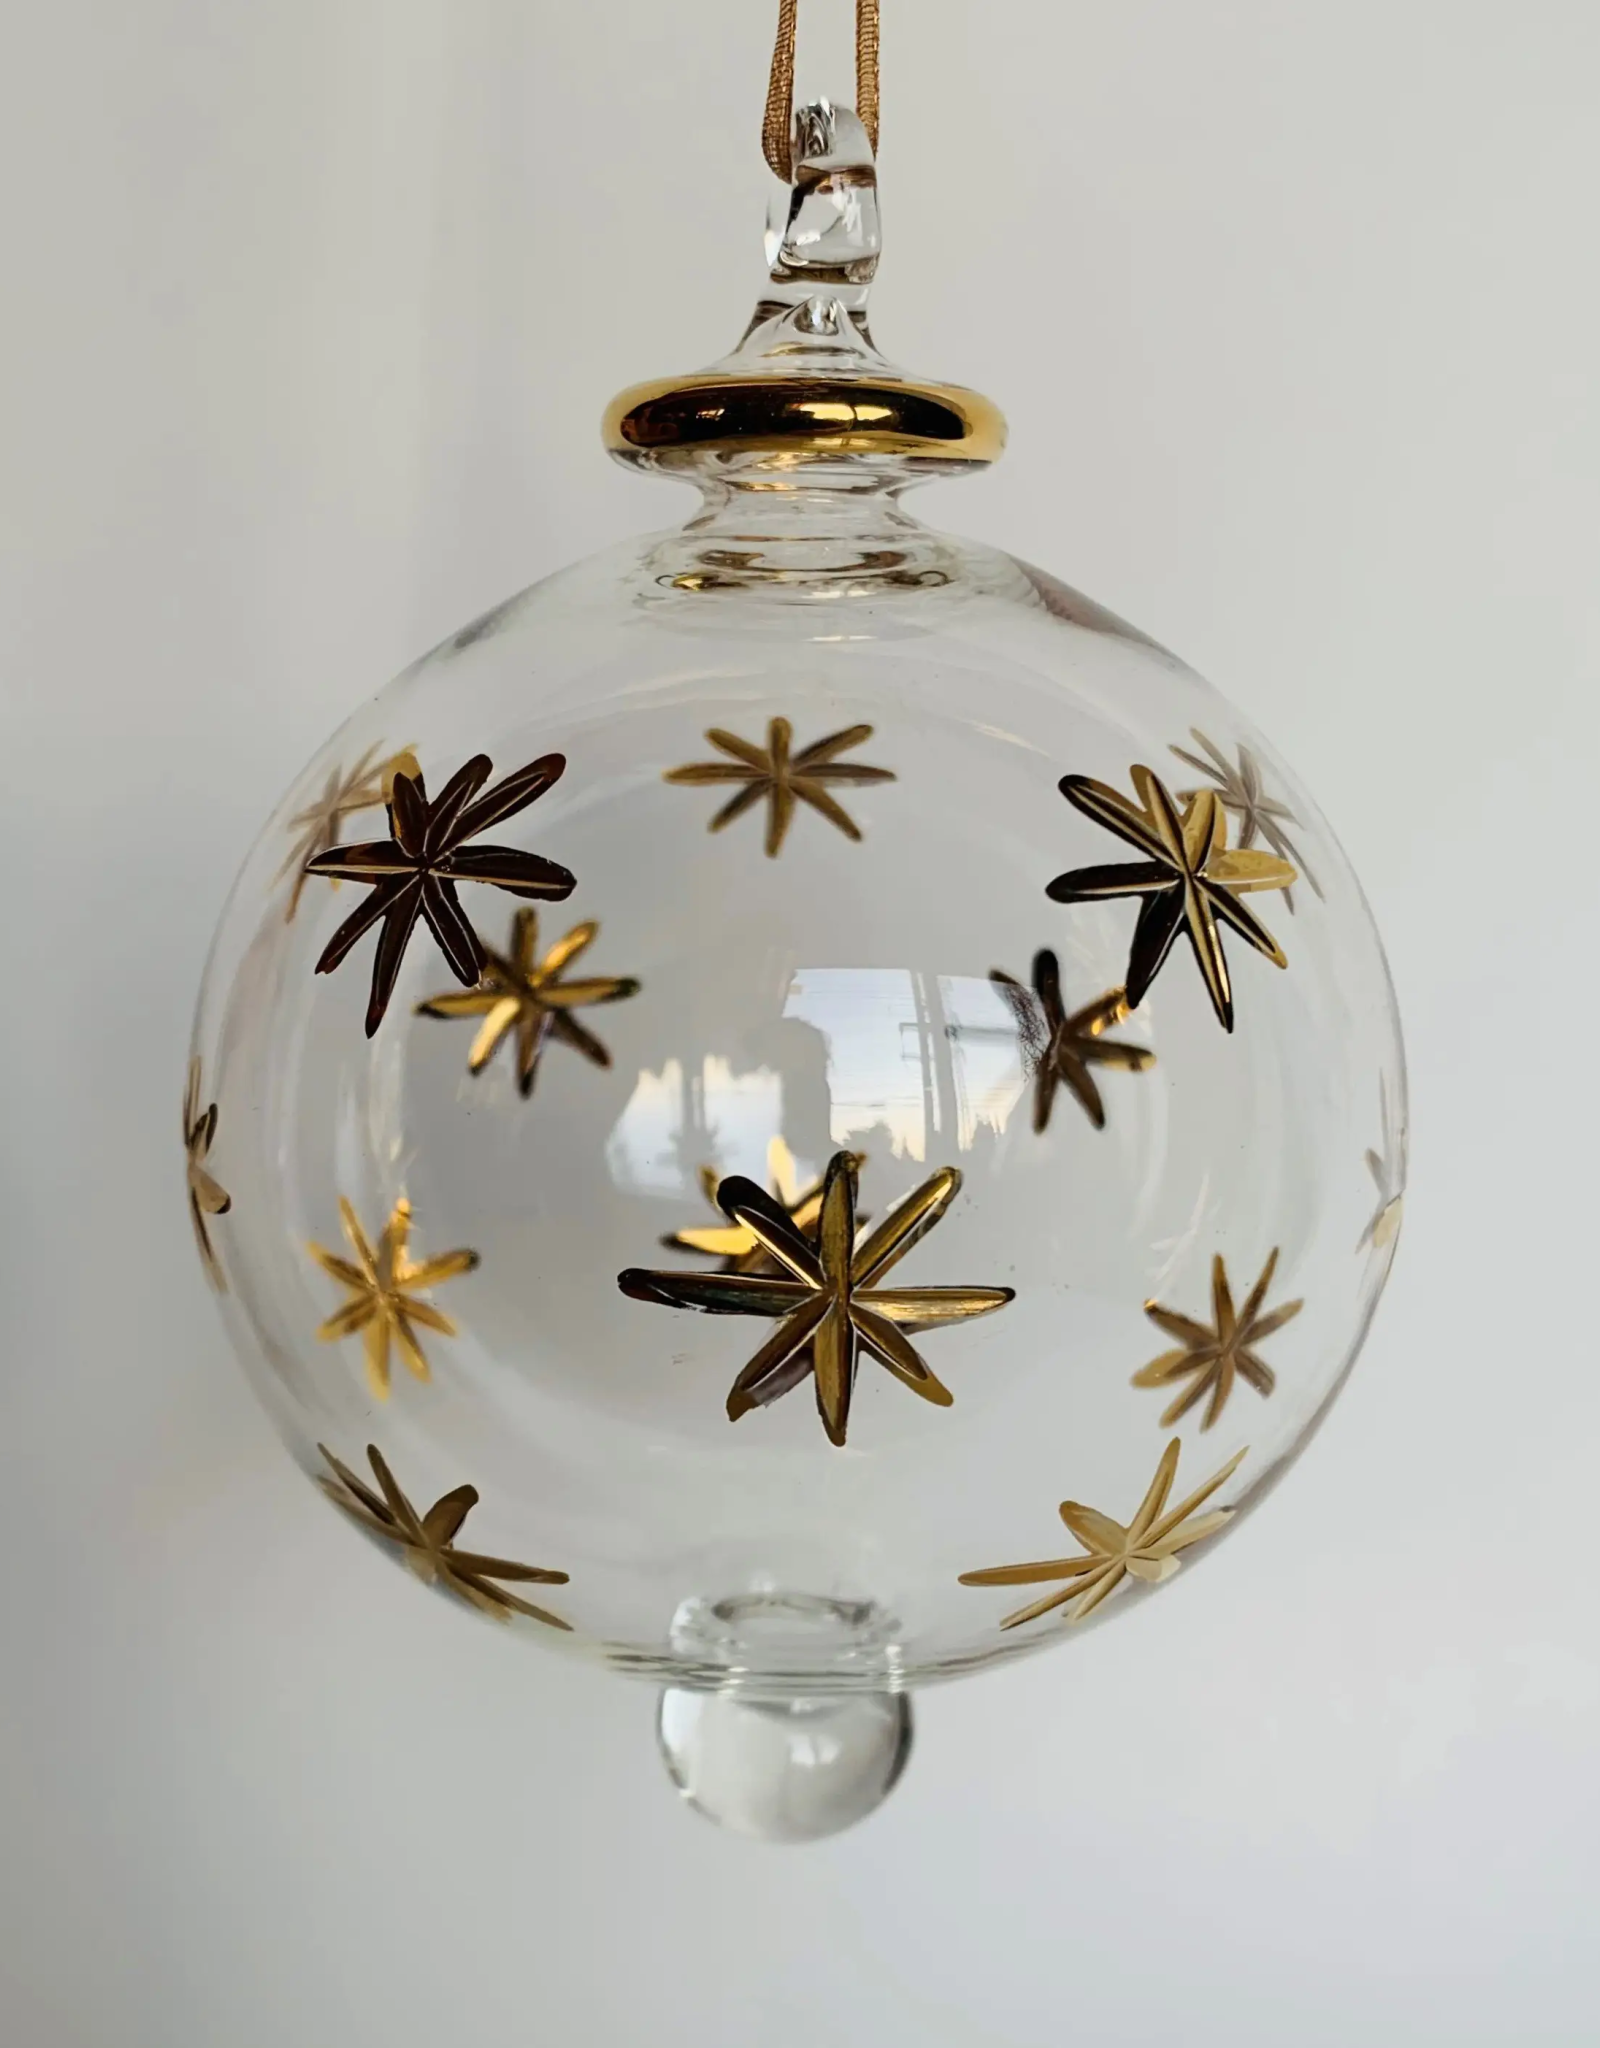 Dandarah Blown Glass Ornament - Gold Stars